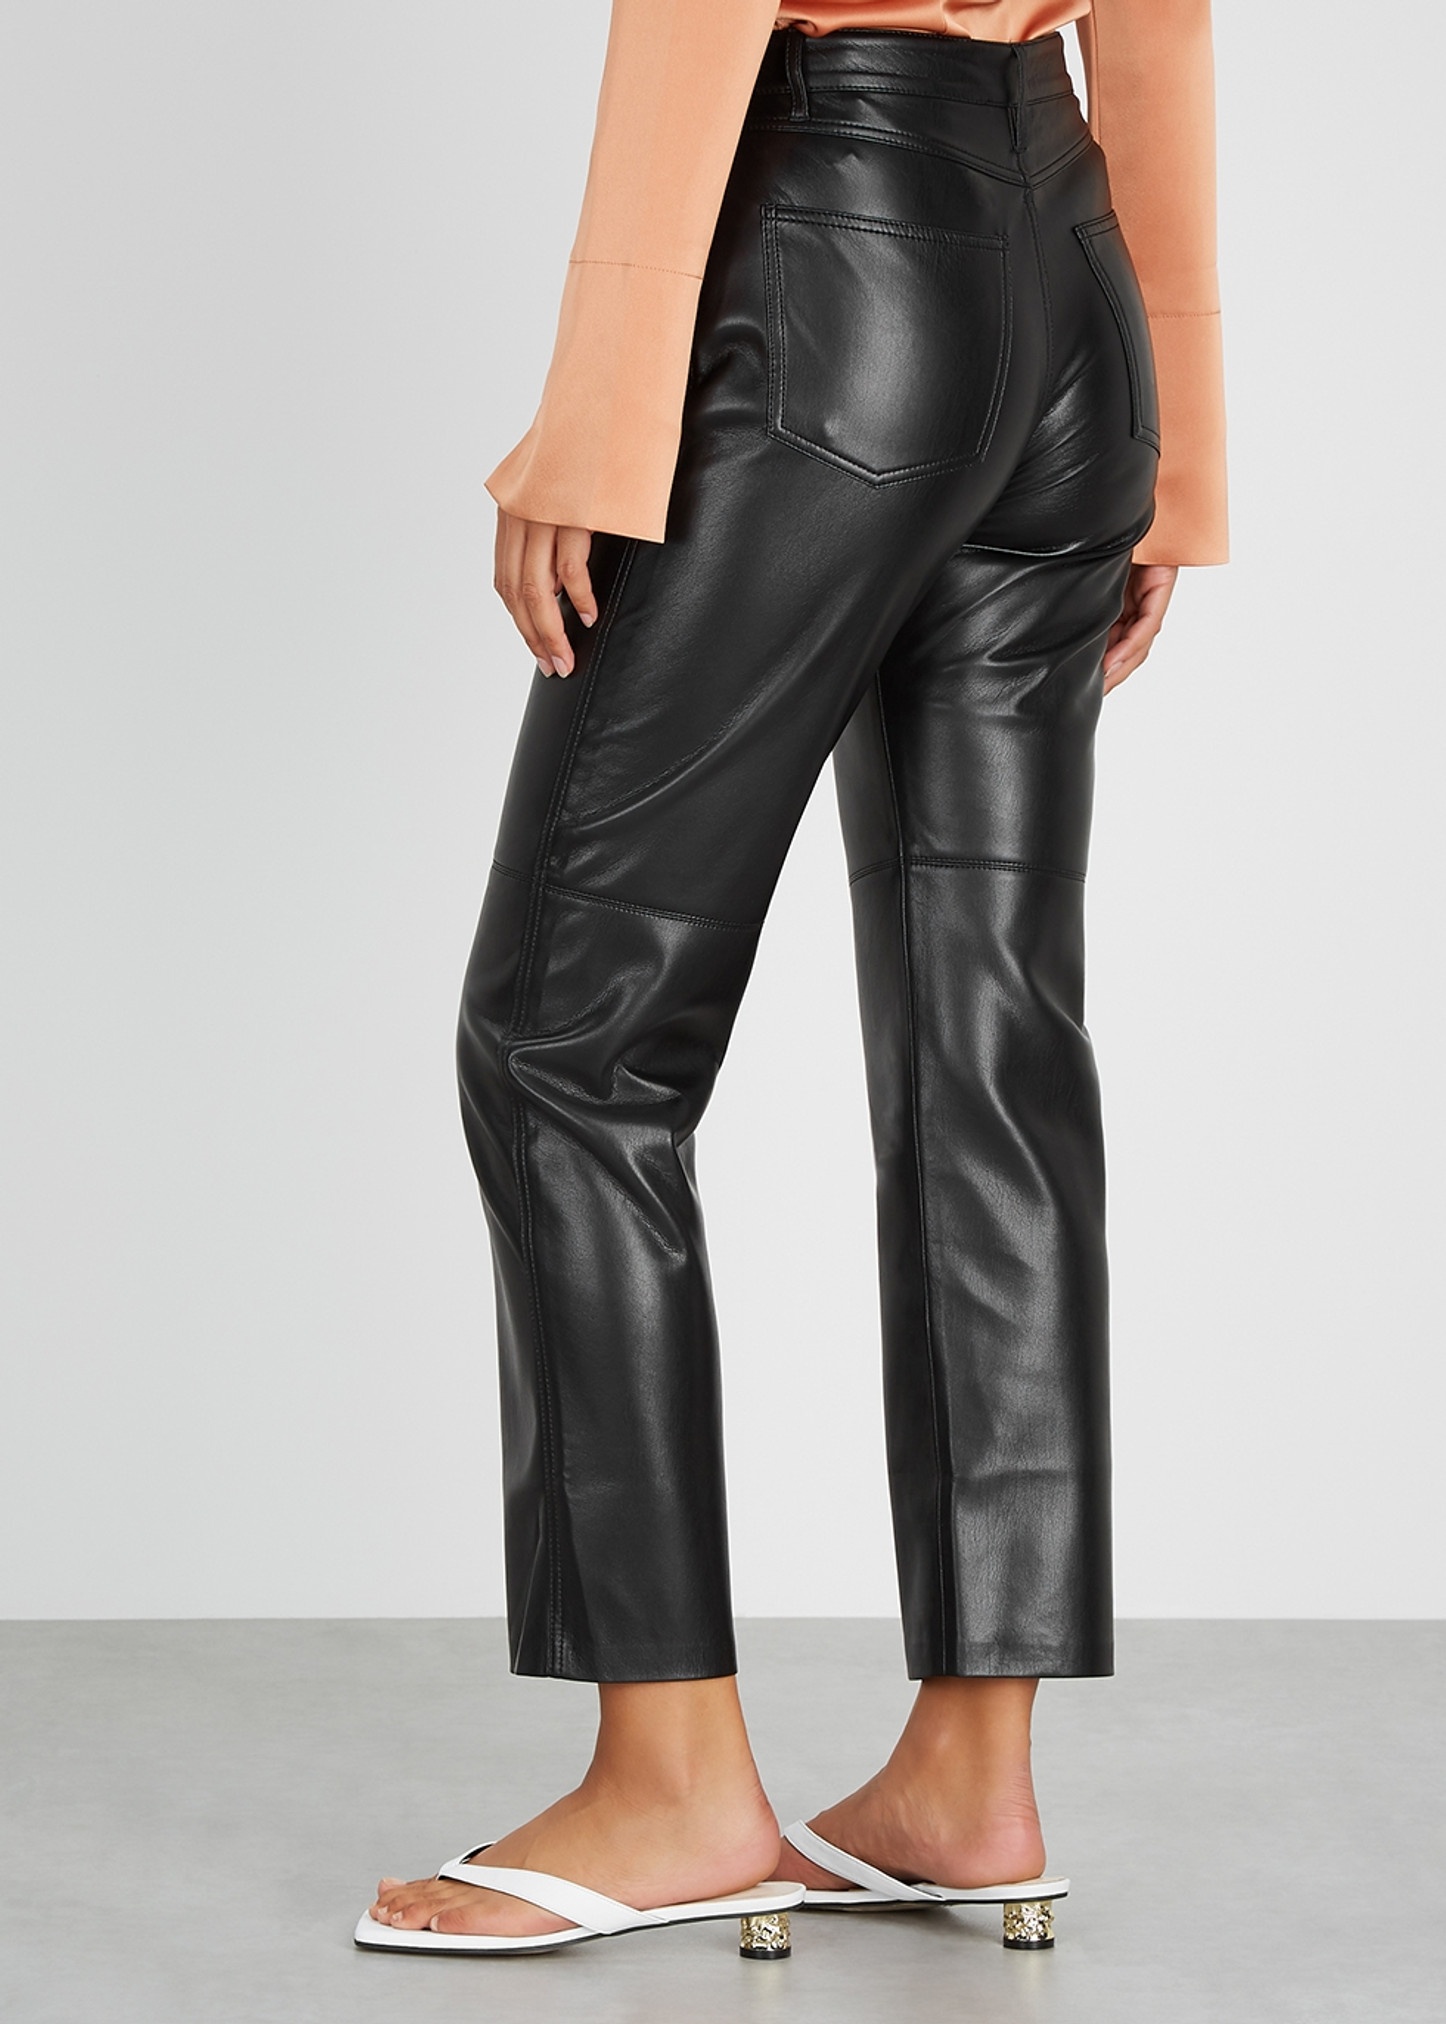 Vinni black faux leather trousers - 3